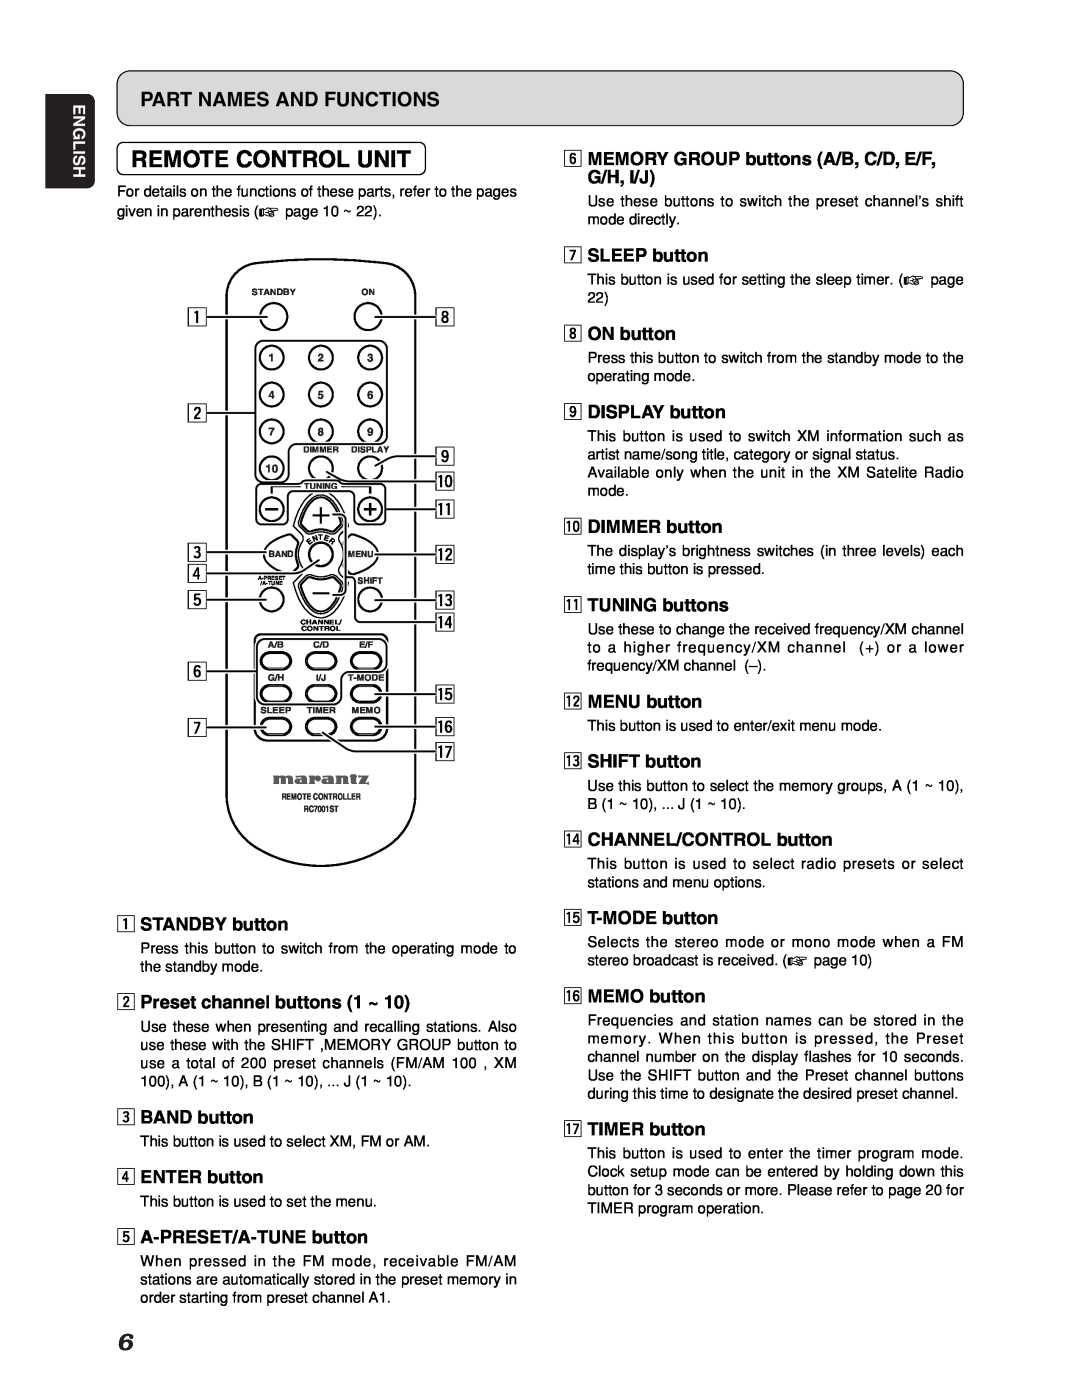 Marantz ST7001 manual Remote Control Unit, Part Names And Functions 